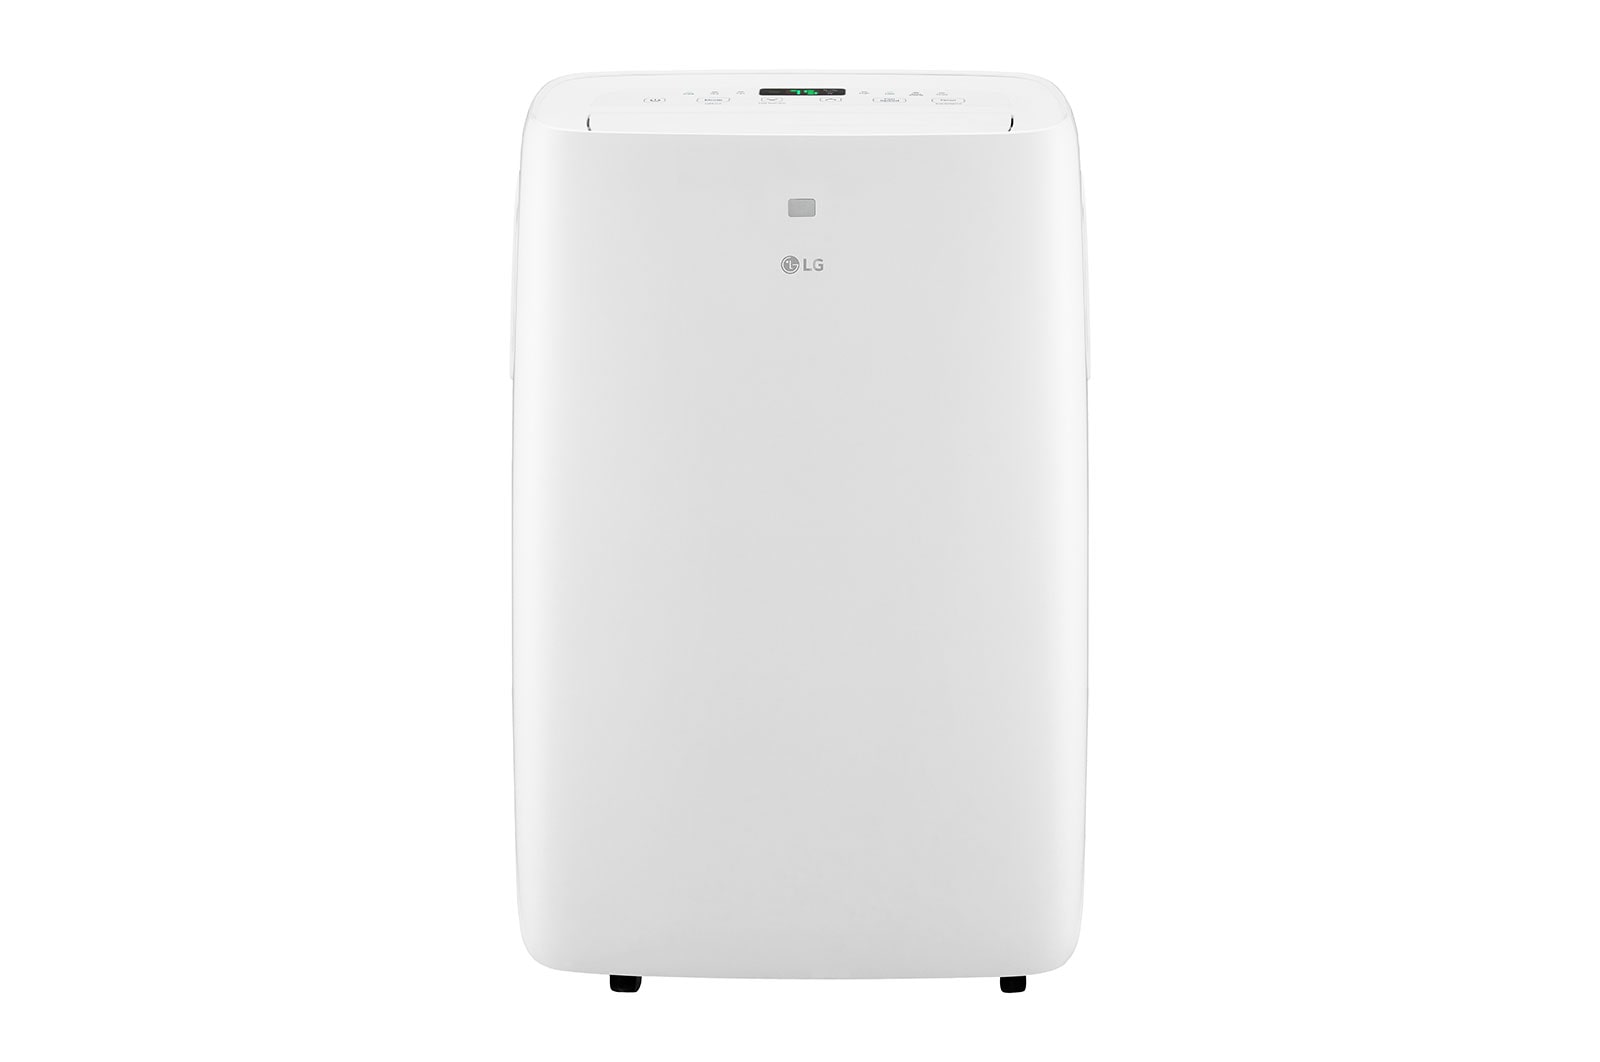 6,000 BTU Portable Air Conditioner